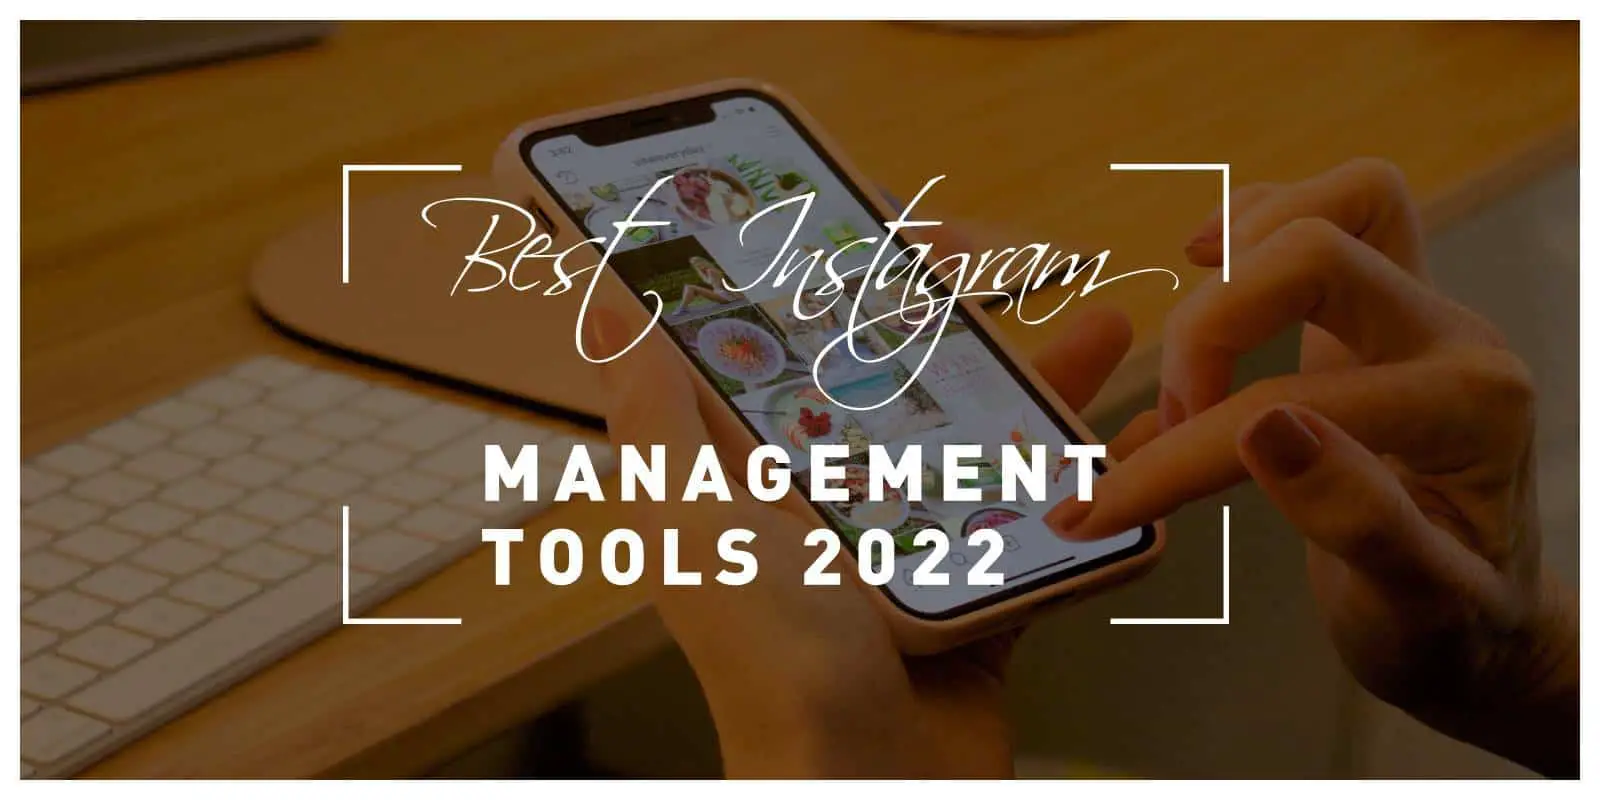 The Best Instagram Management Tools in 2022